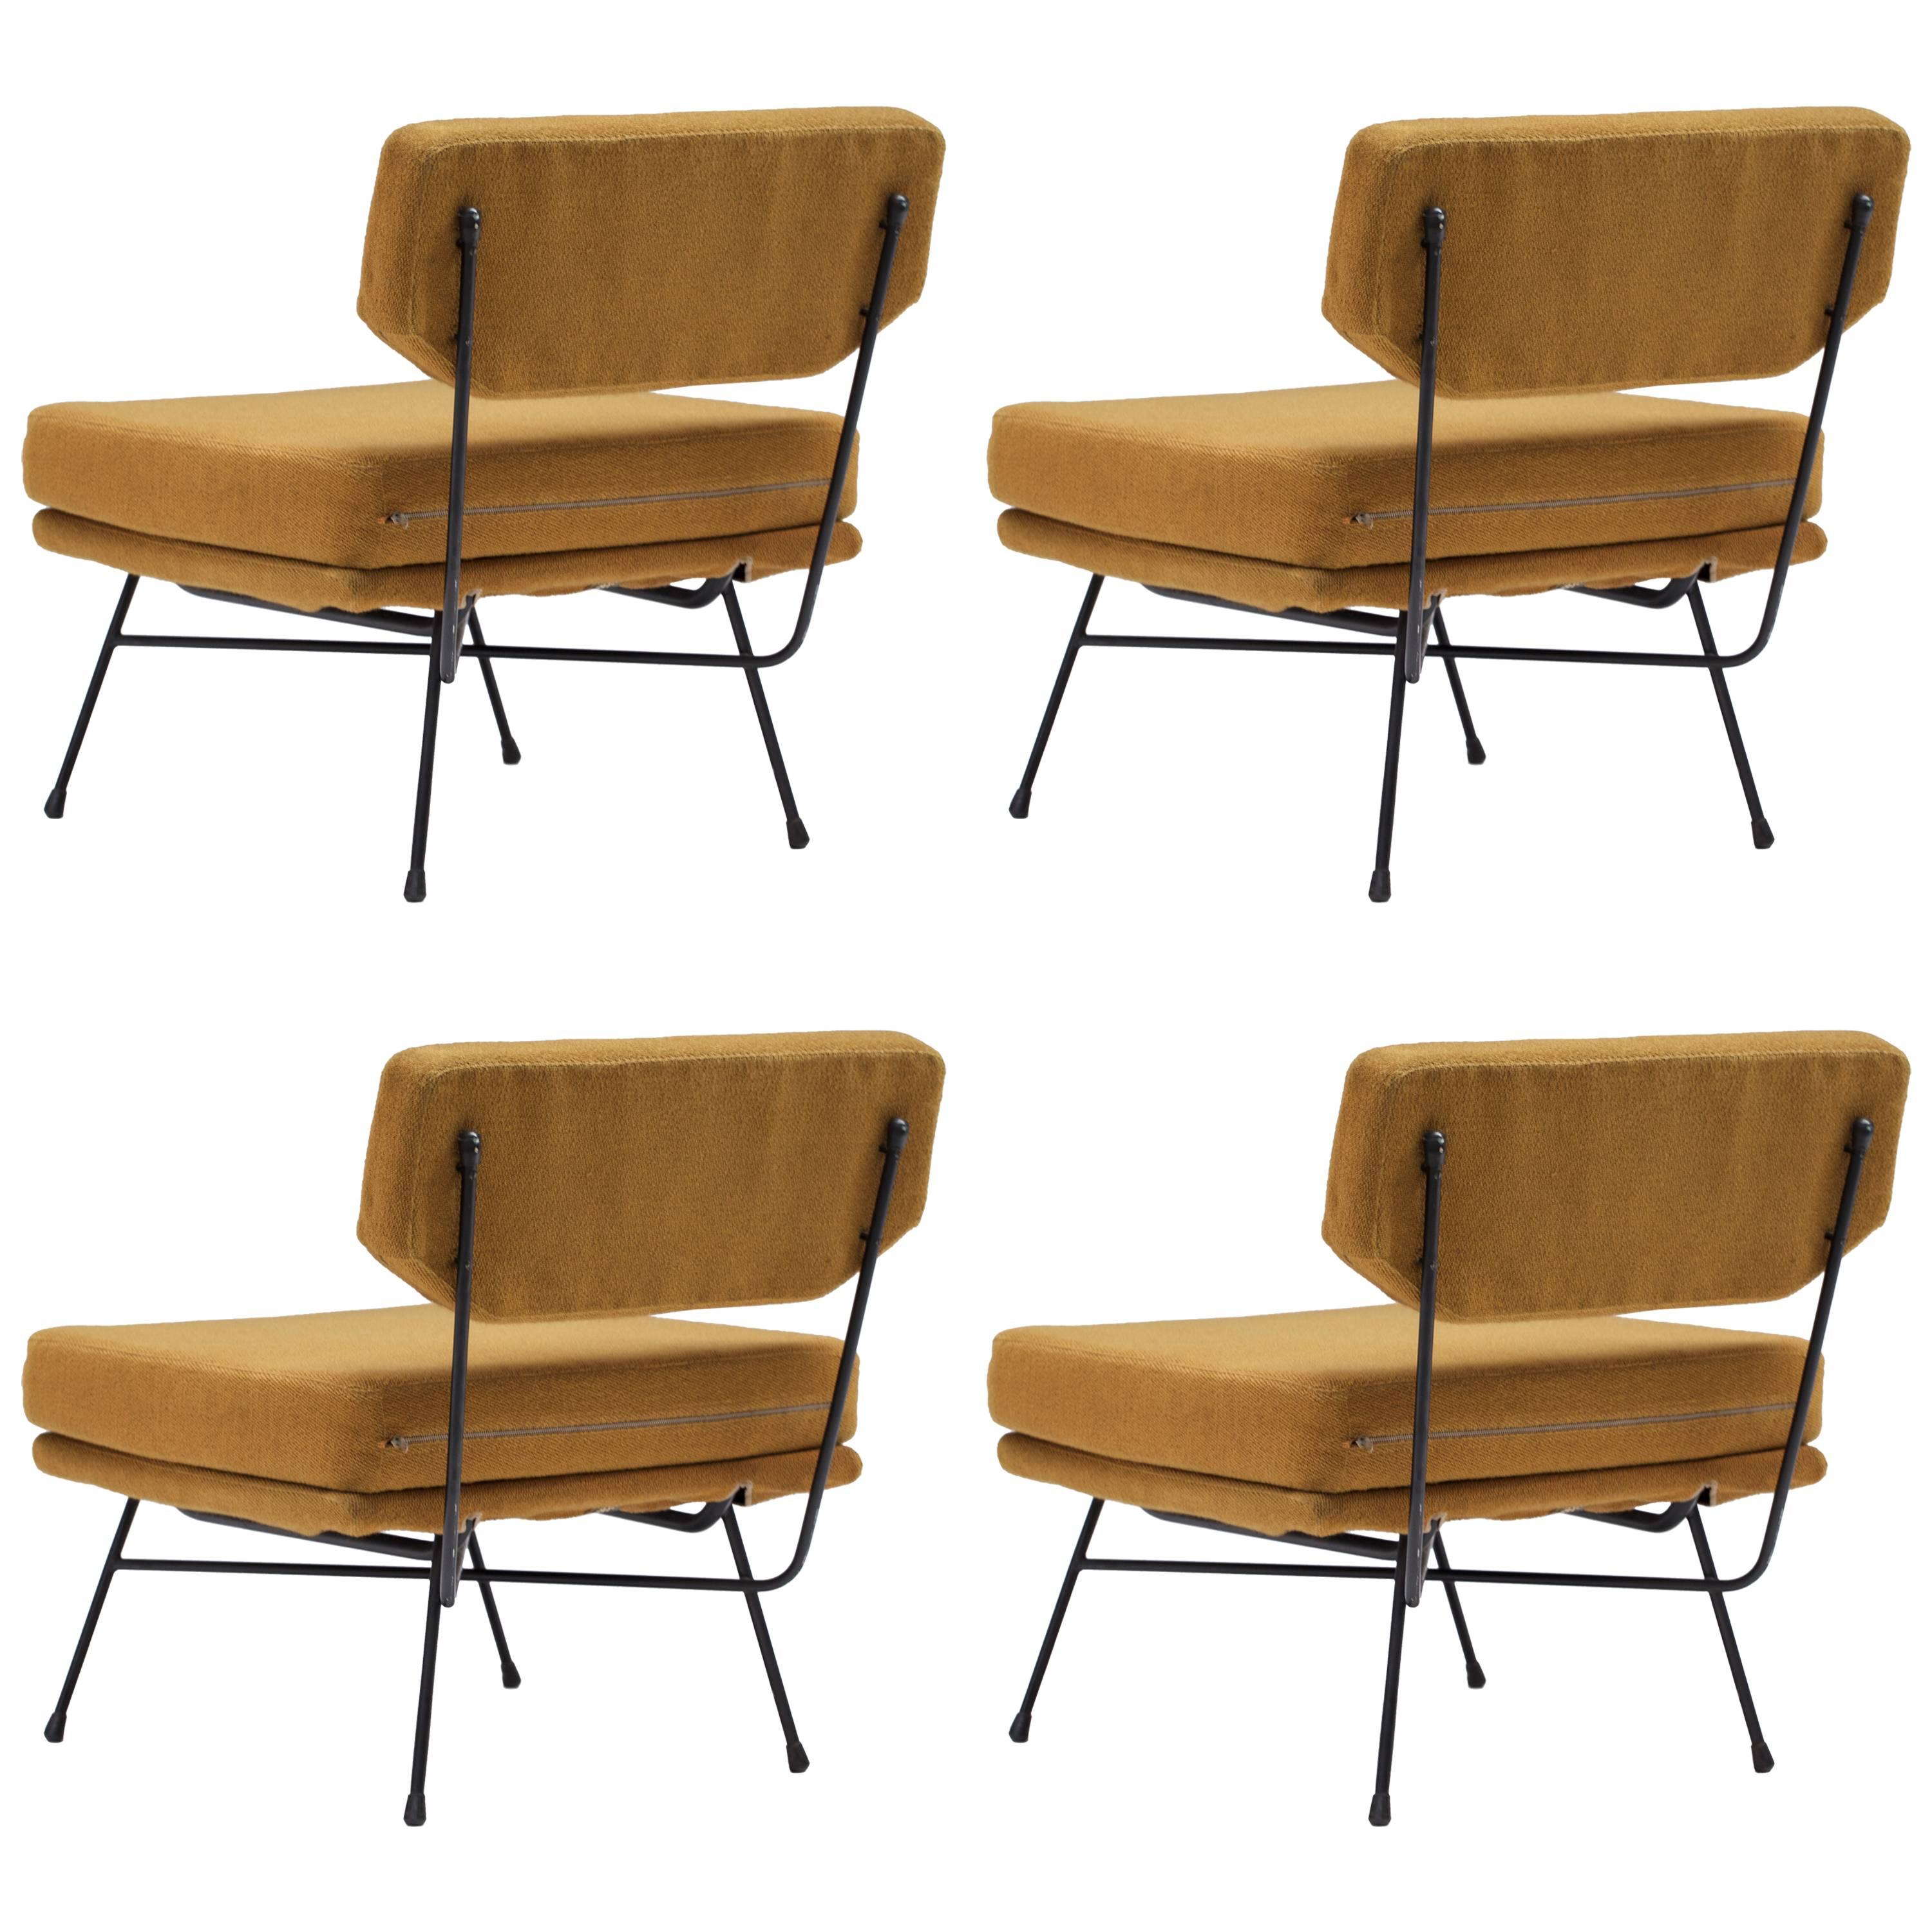 Studio BBPR Elettra Lounge Chairs for Arflex